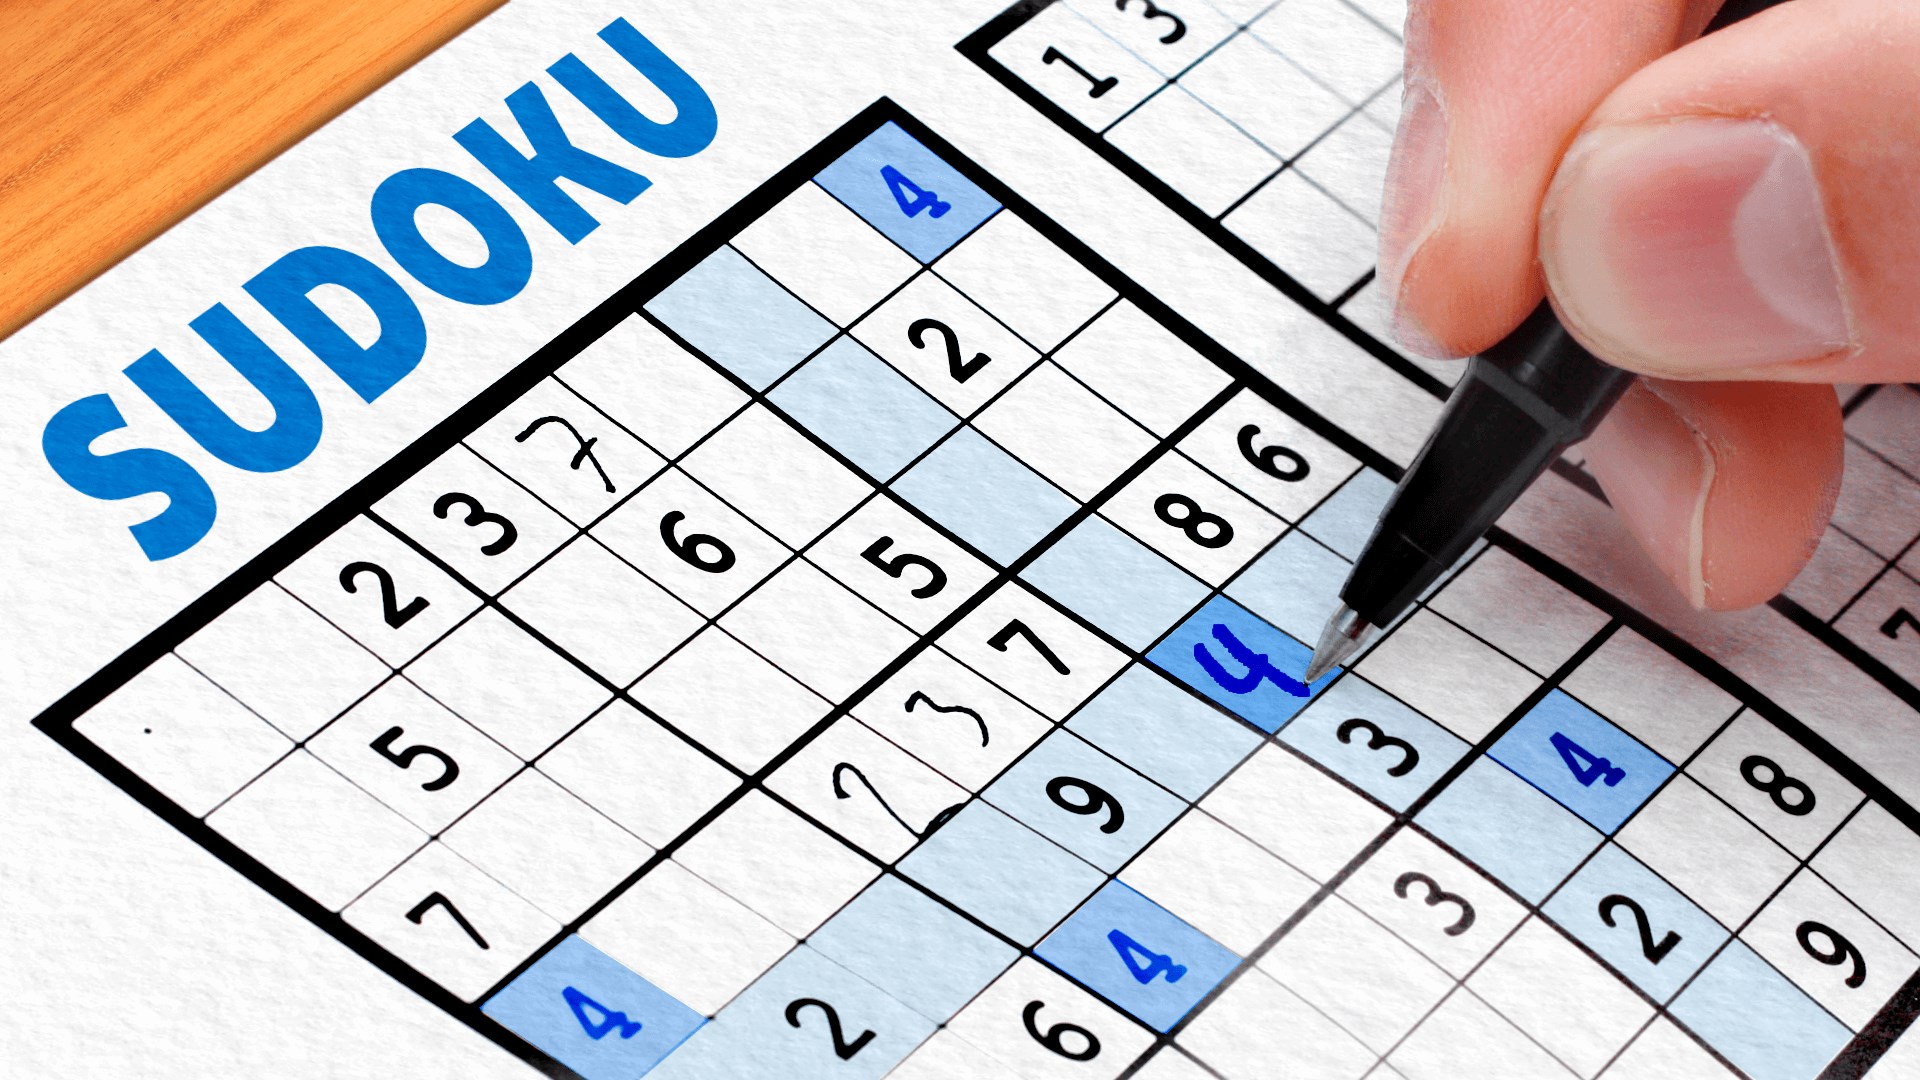 Sudoku. Edition 2024 - Editions 365